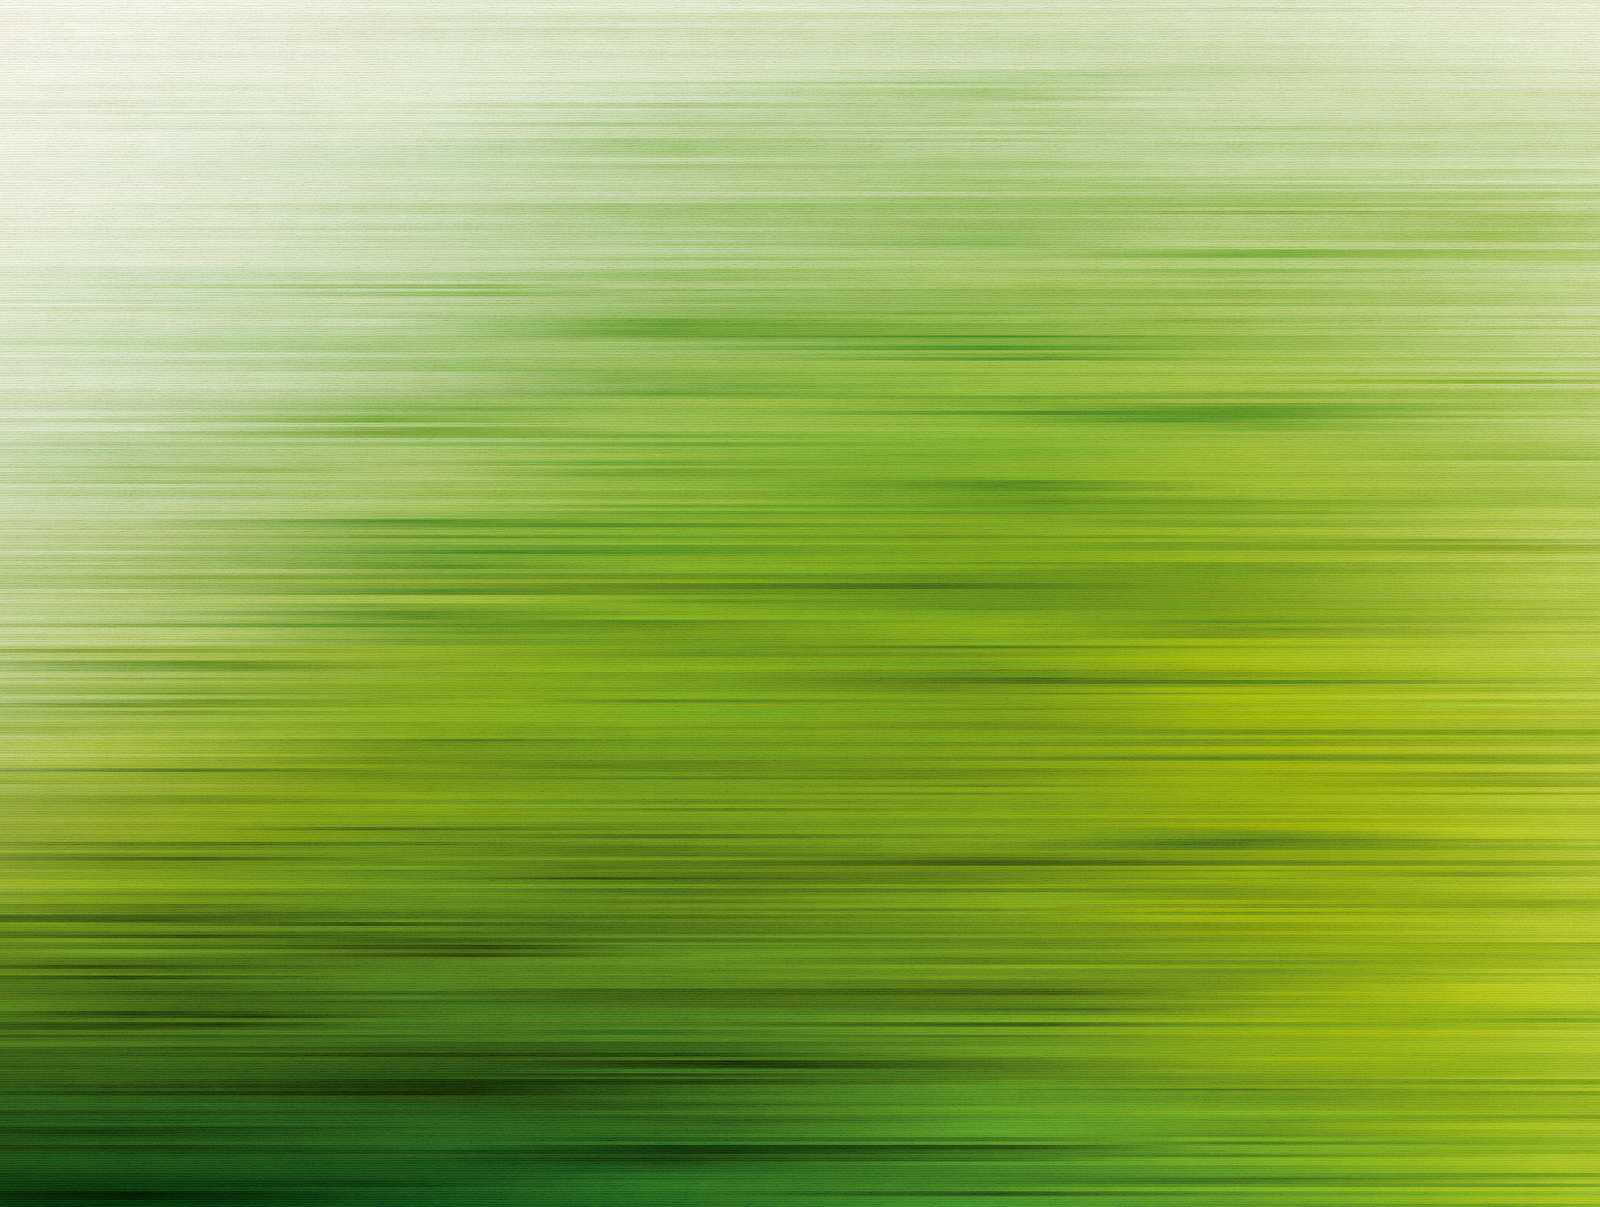             Wallpaper novelty - green motif wallpaper with gradient design
        